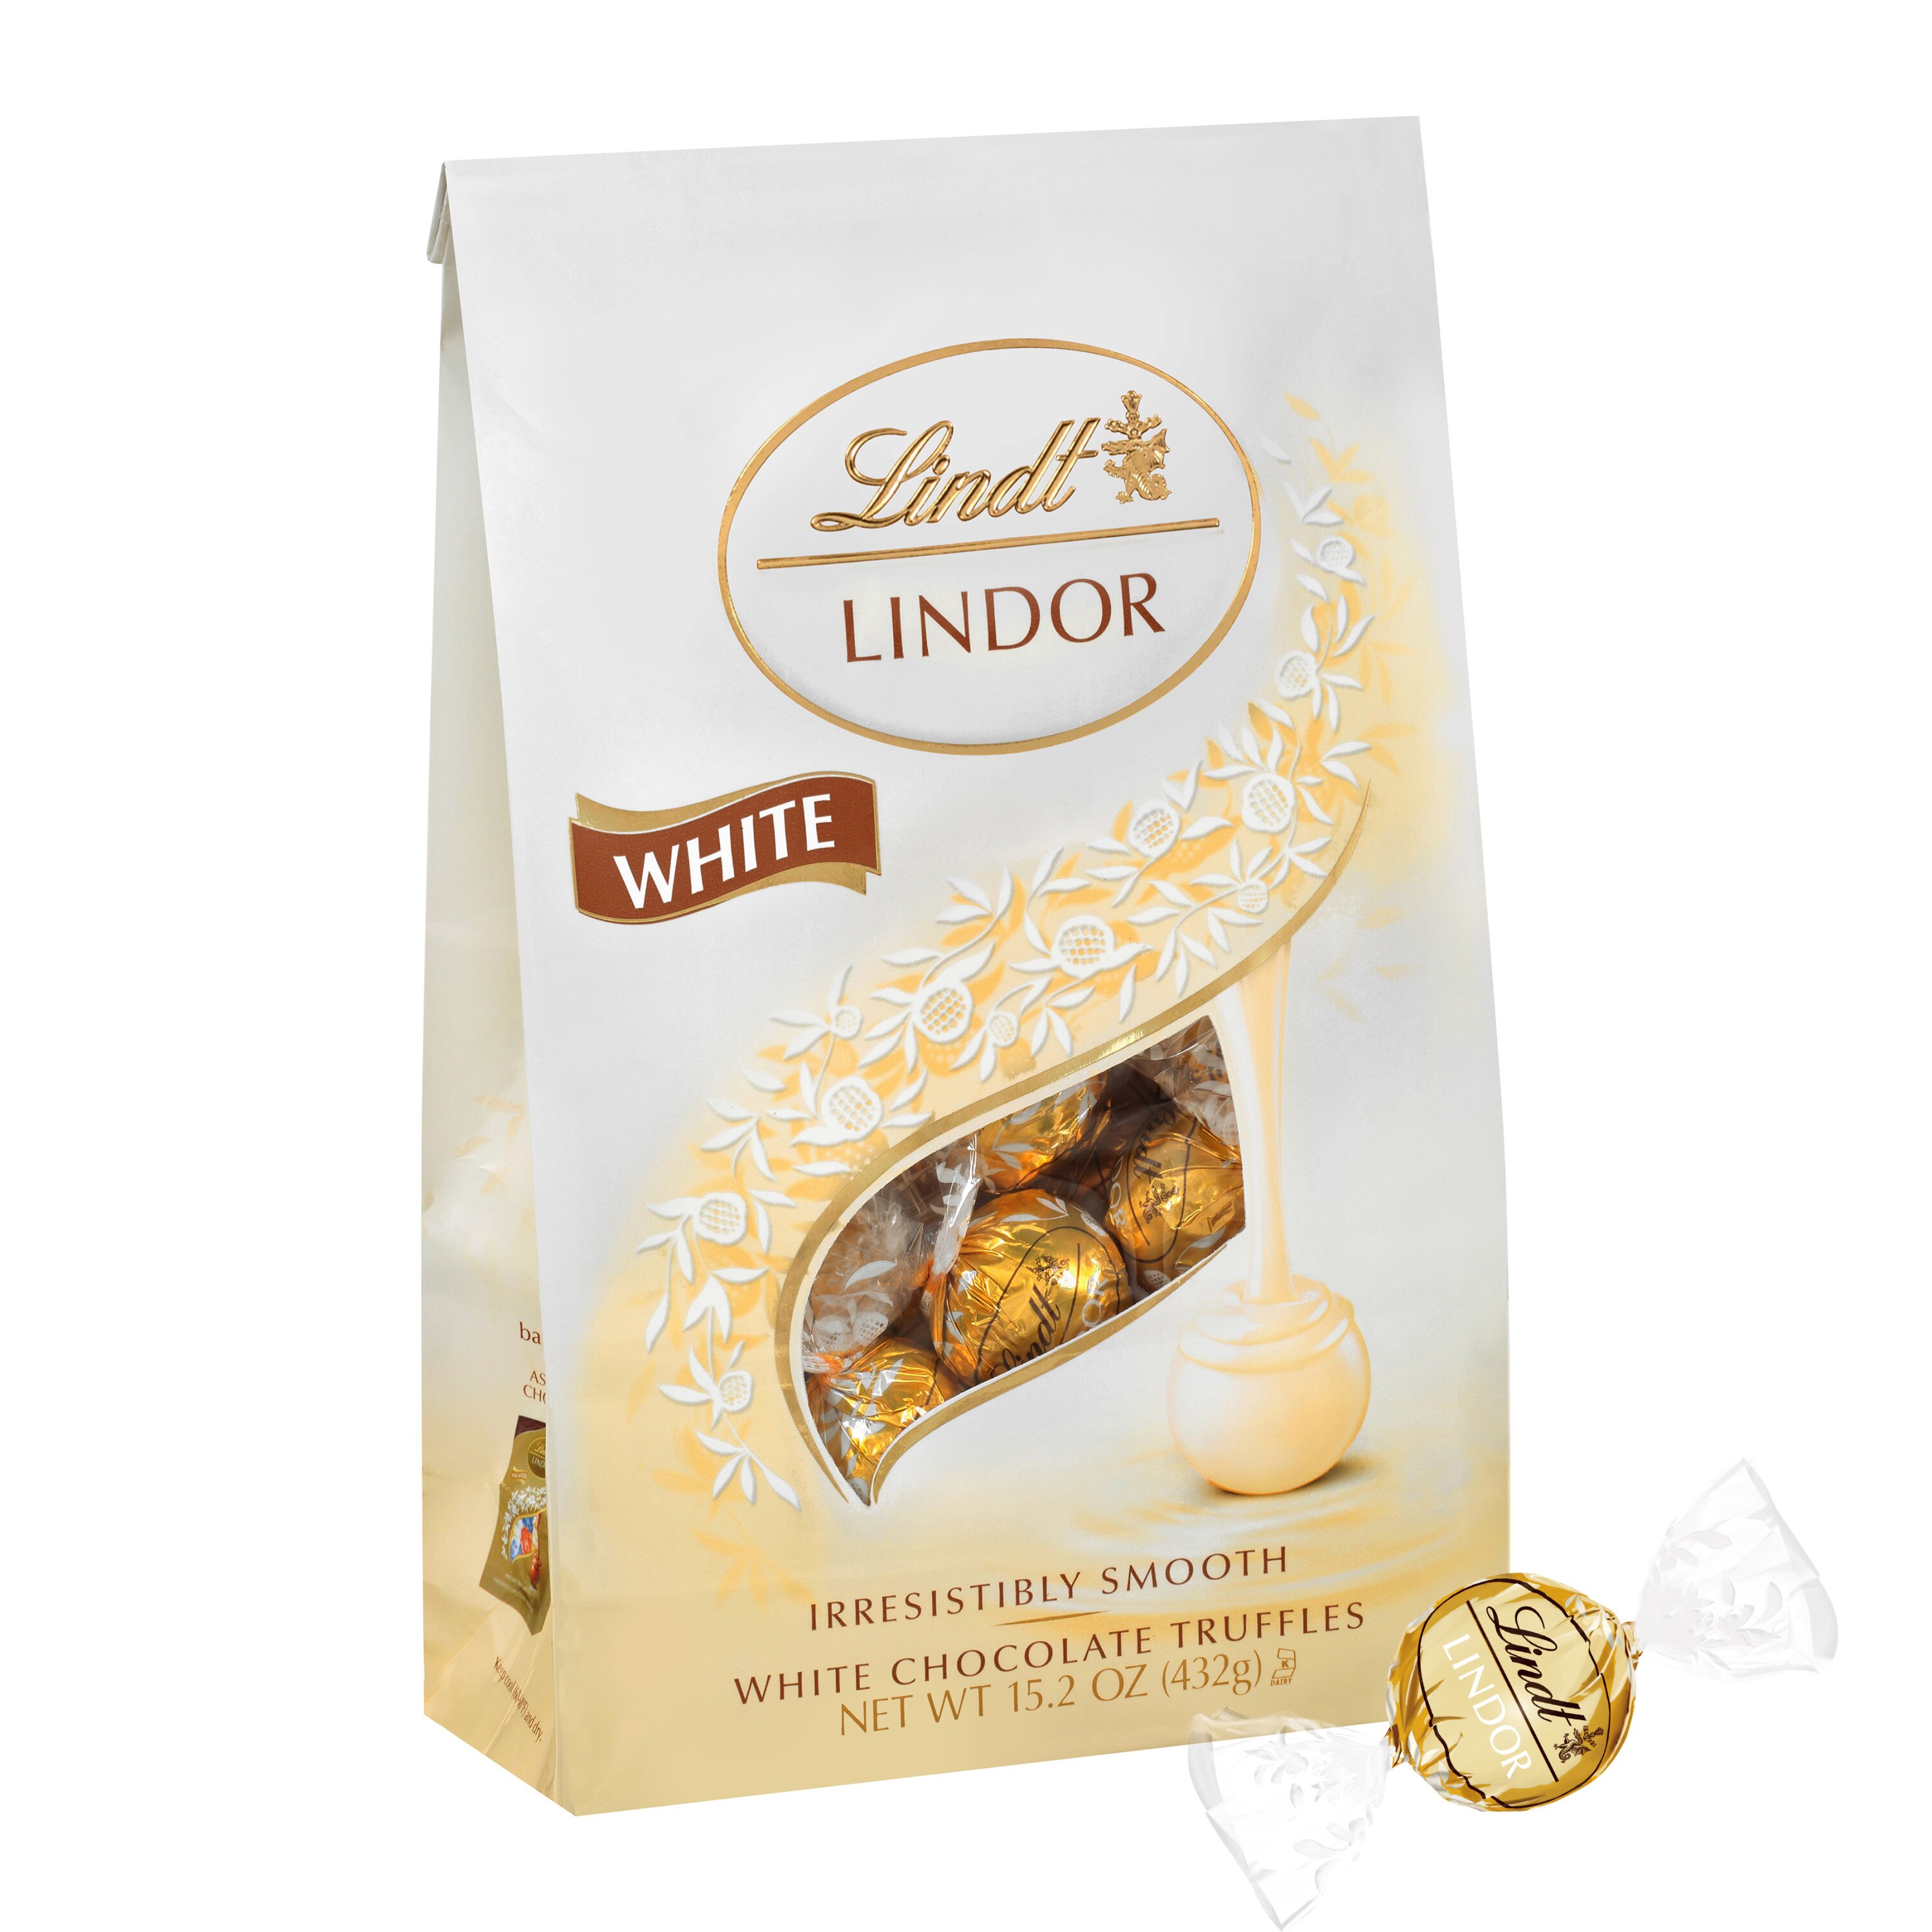 Lindt LINDOR White Chocolate Truffles, Chocolates with Smooth, Melting Truffle Center, 15.2 oz. Bag